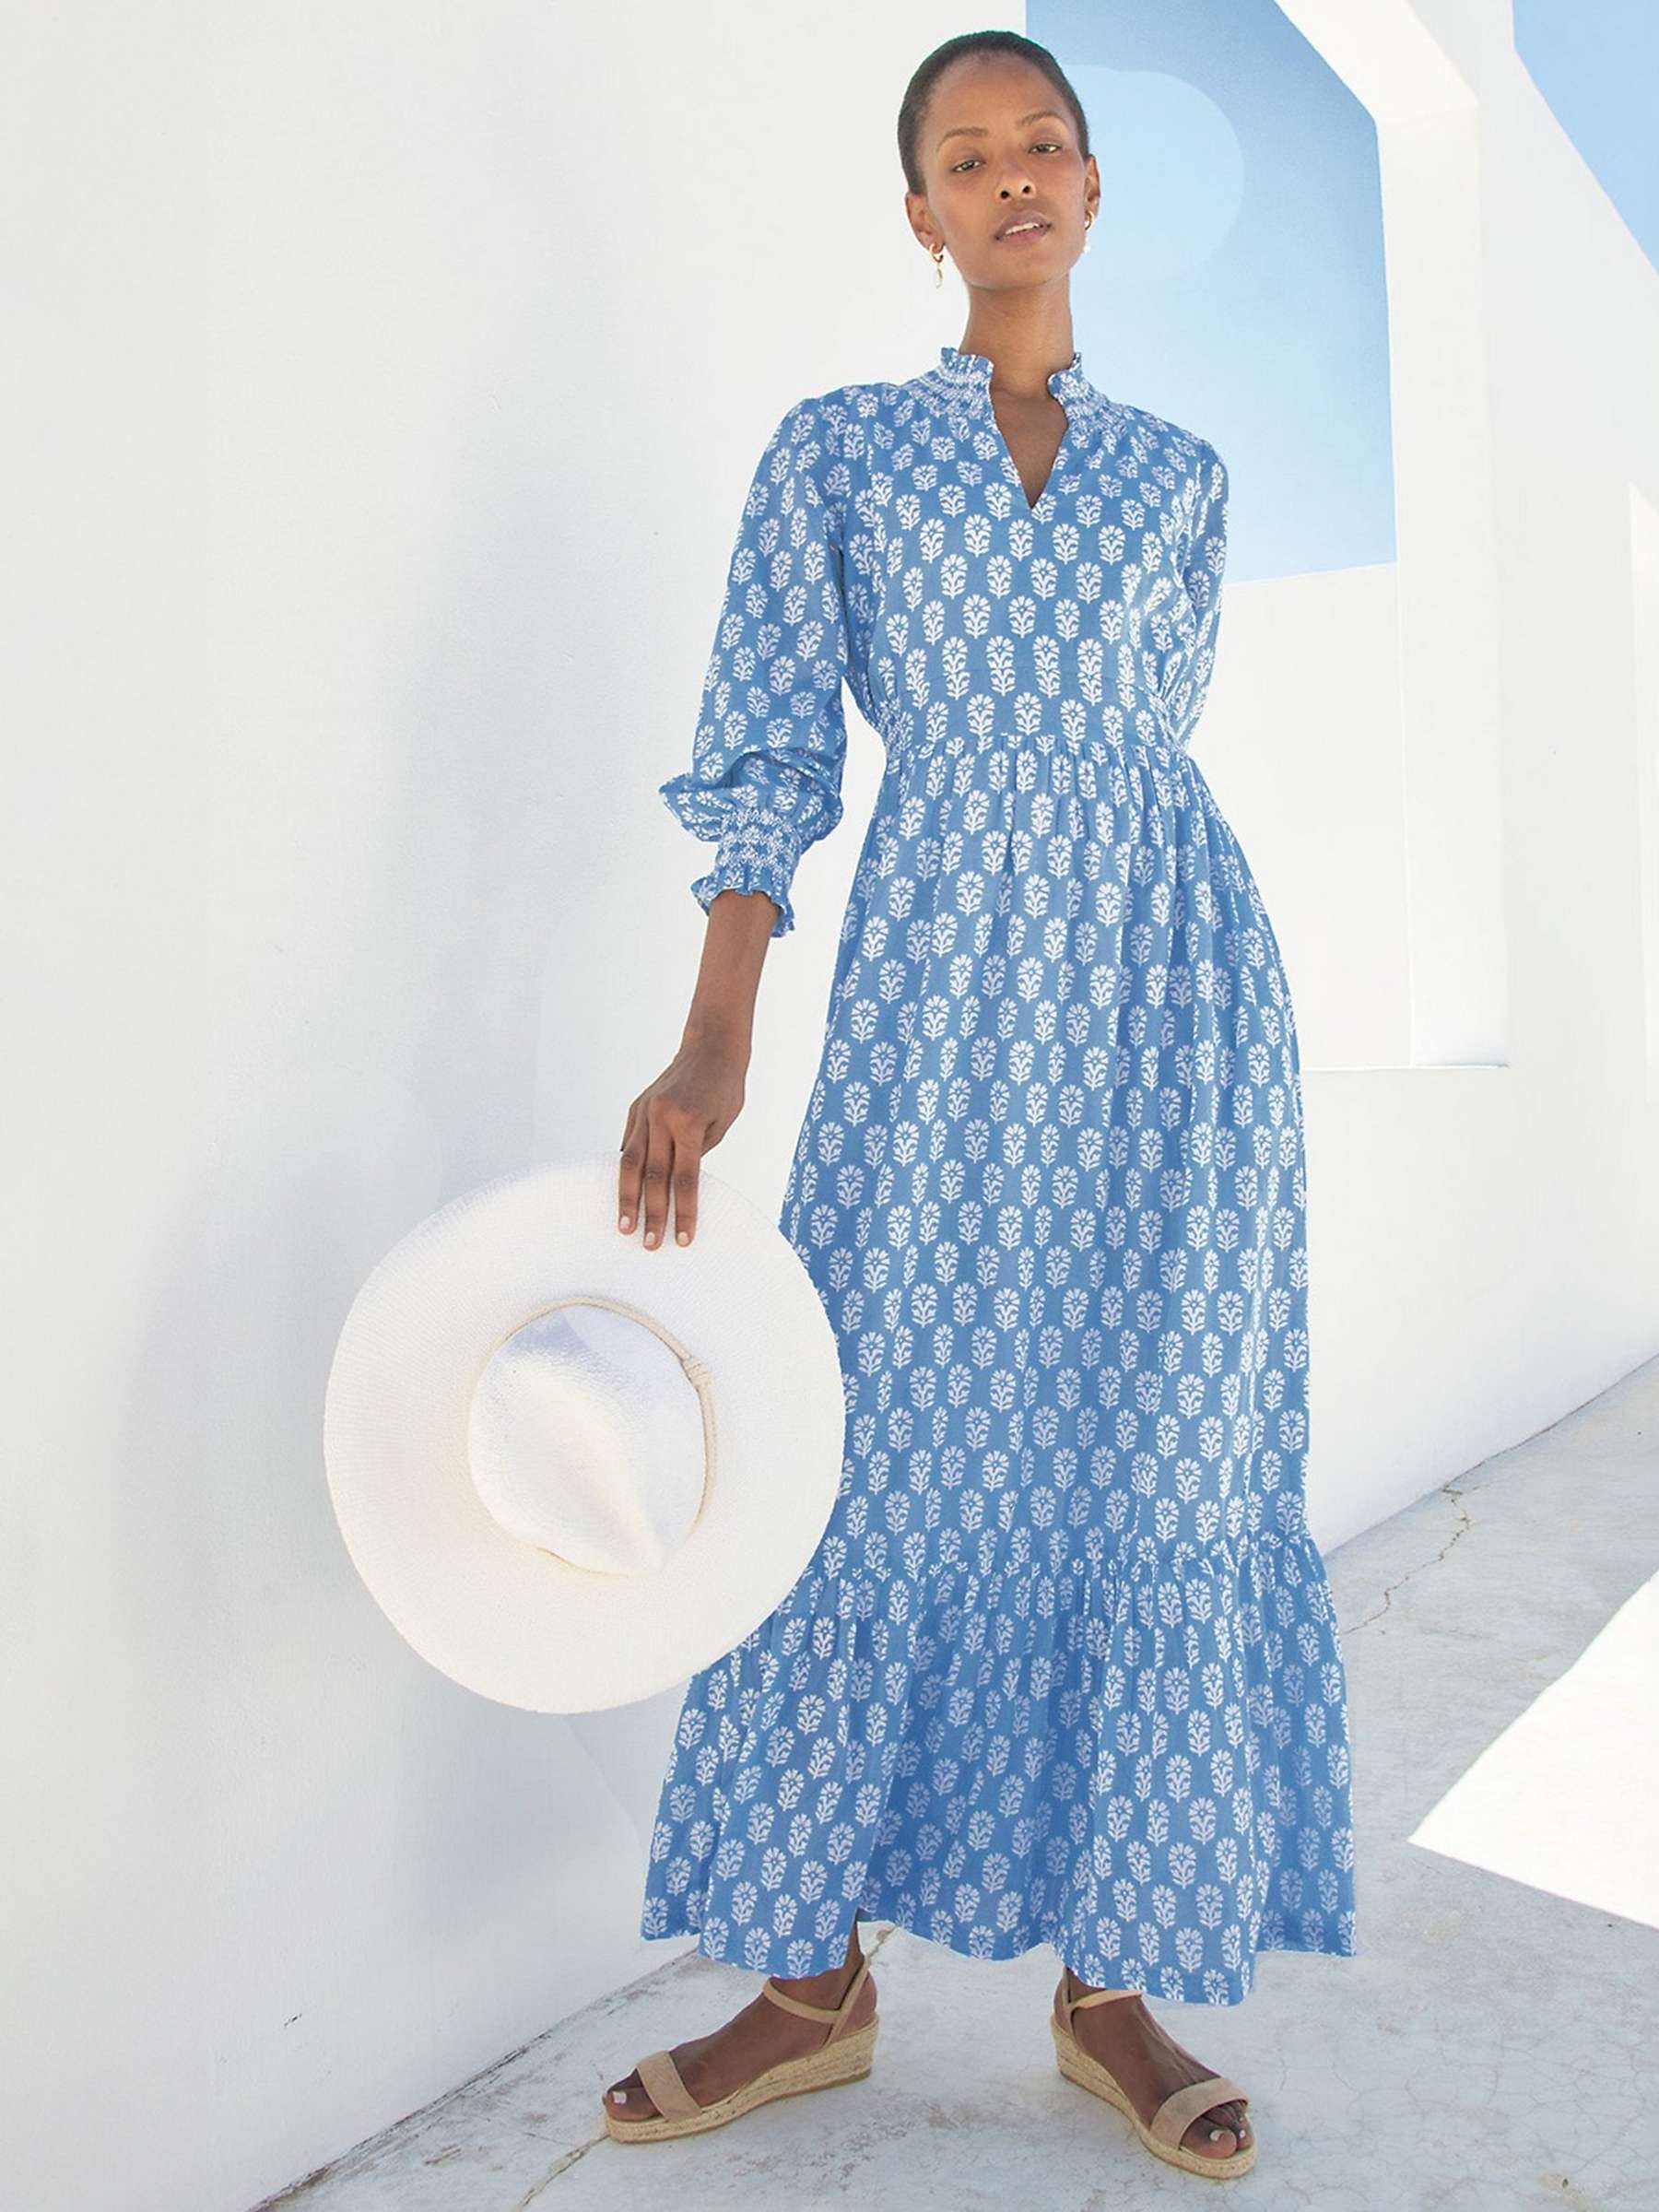 Buy Aspiga Emmeline Maxi Dress, Geranium Blue/White Online at johnlewis.com